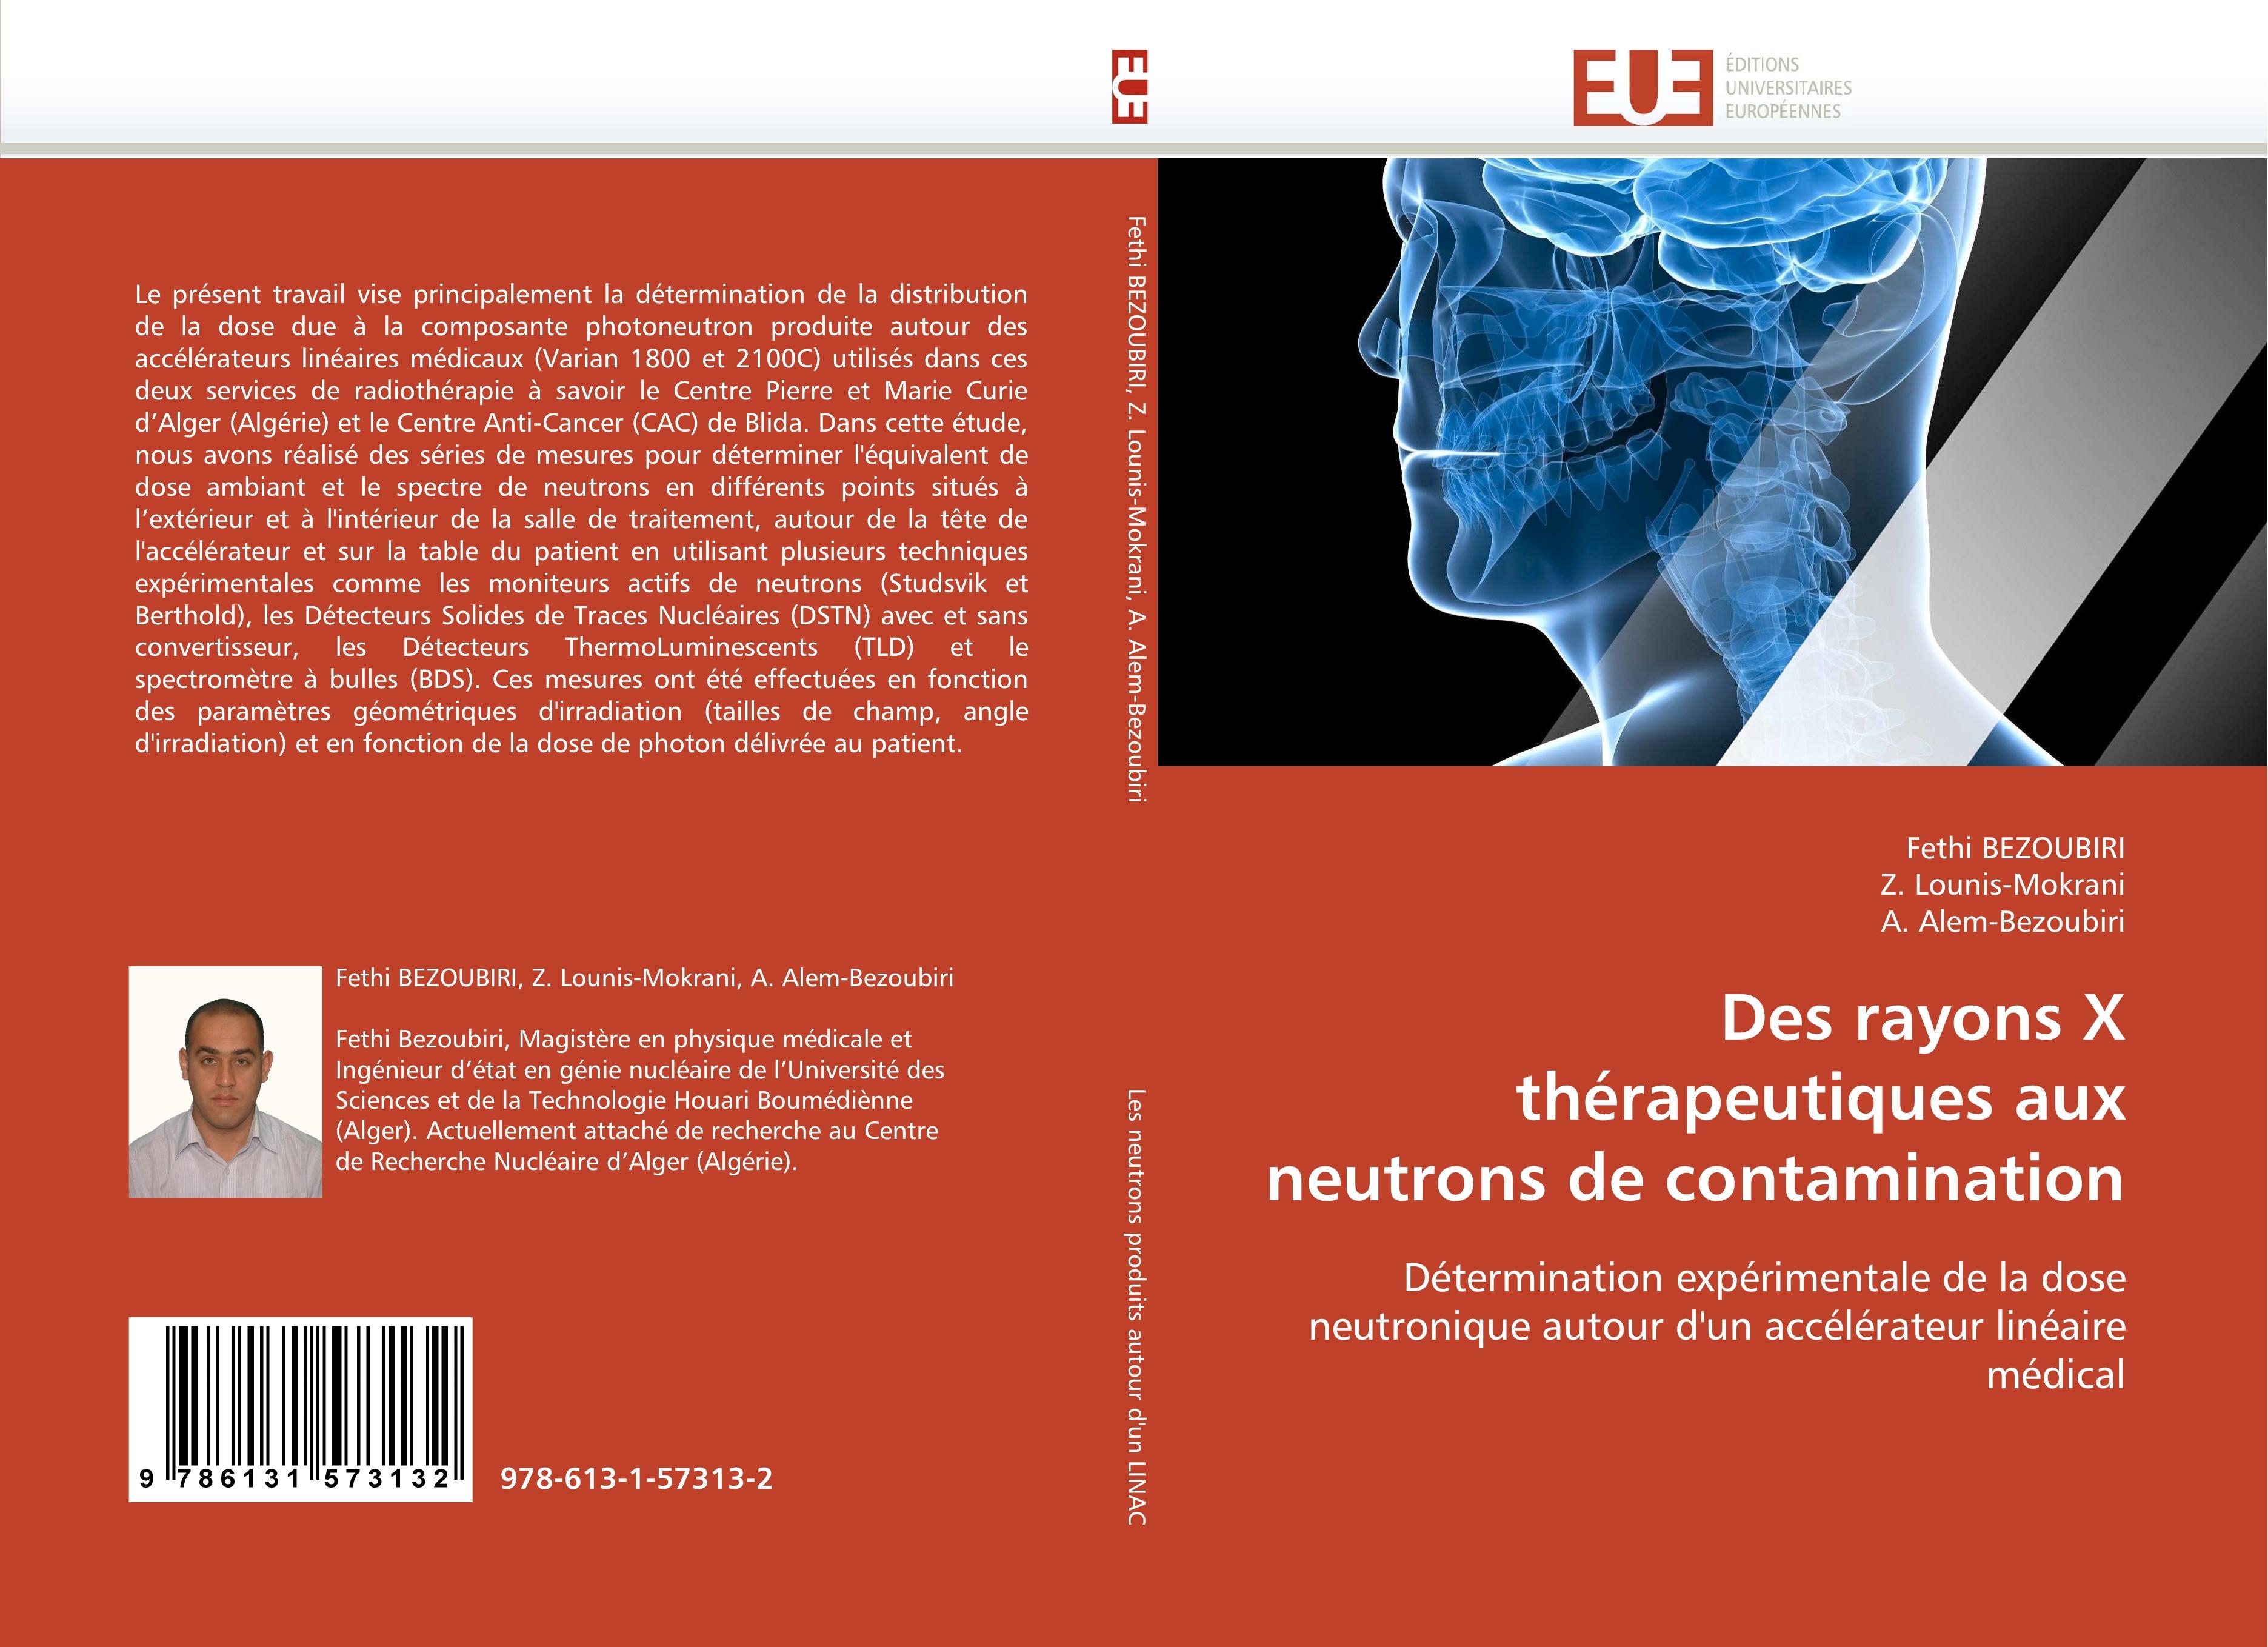 Des rayons X thérapeutiques aux neutrons de contamination - Fethi BEZOUBIRI Z. Lounis-Mokrani A. Alem-Bezoubiri